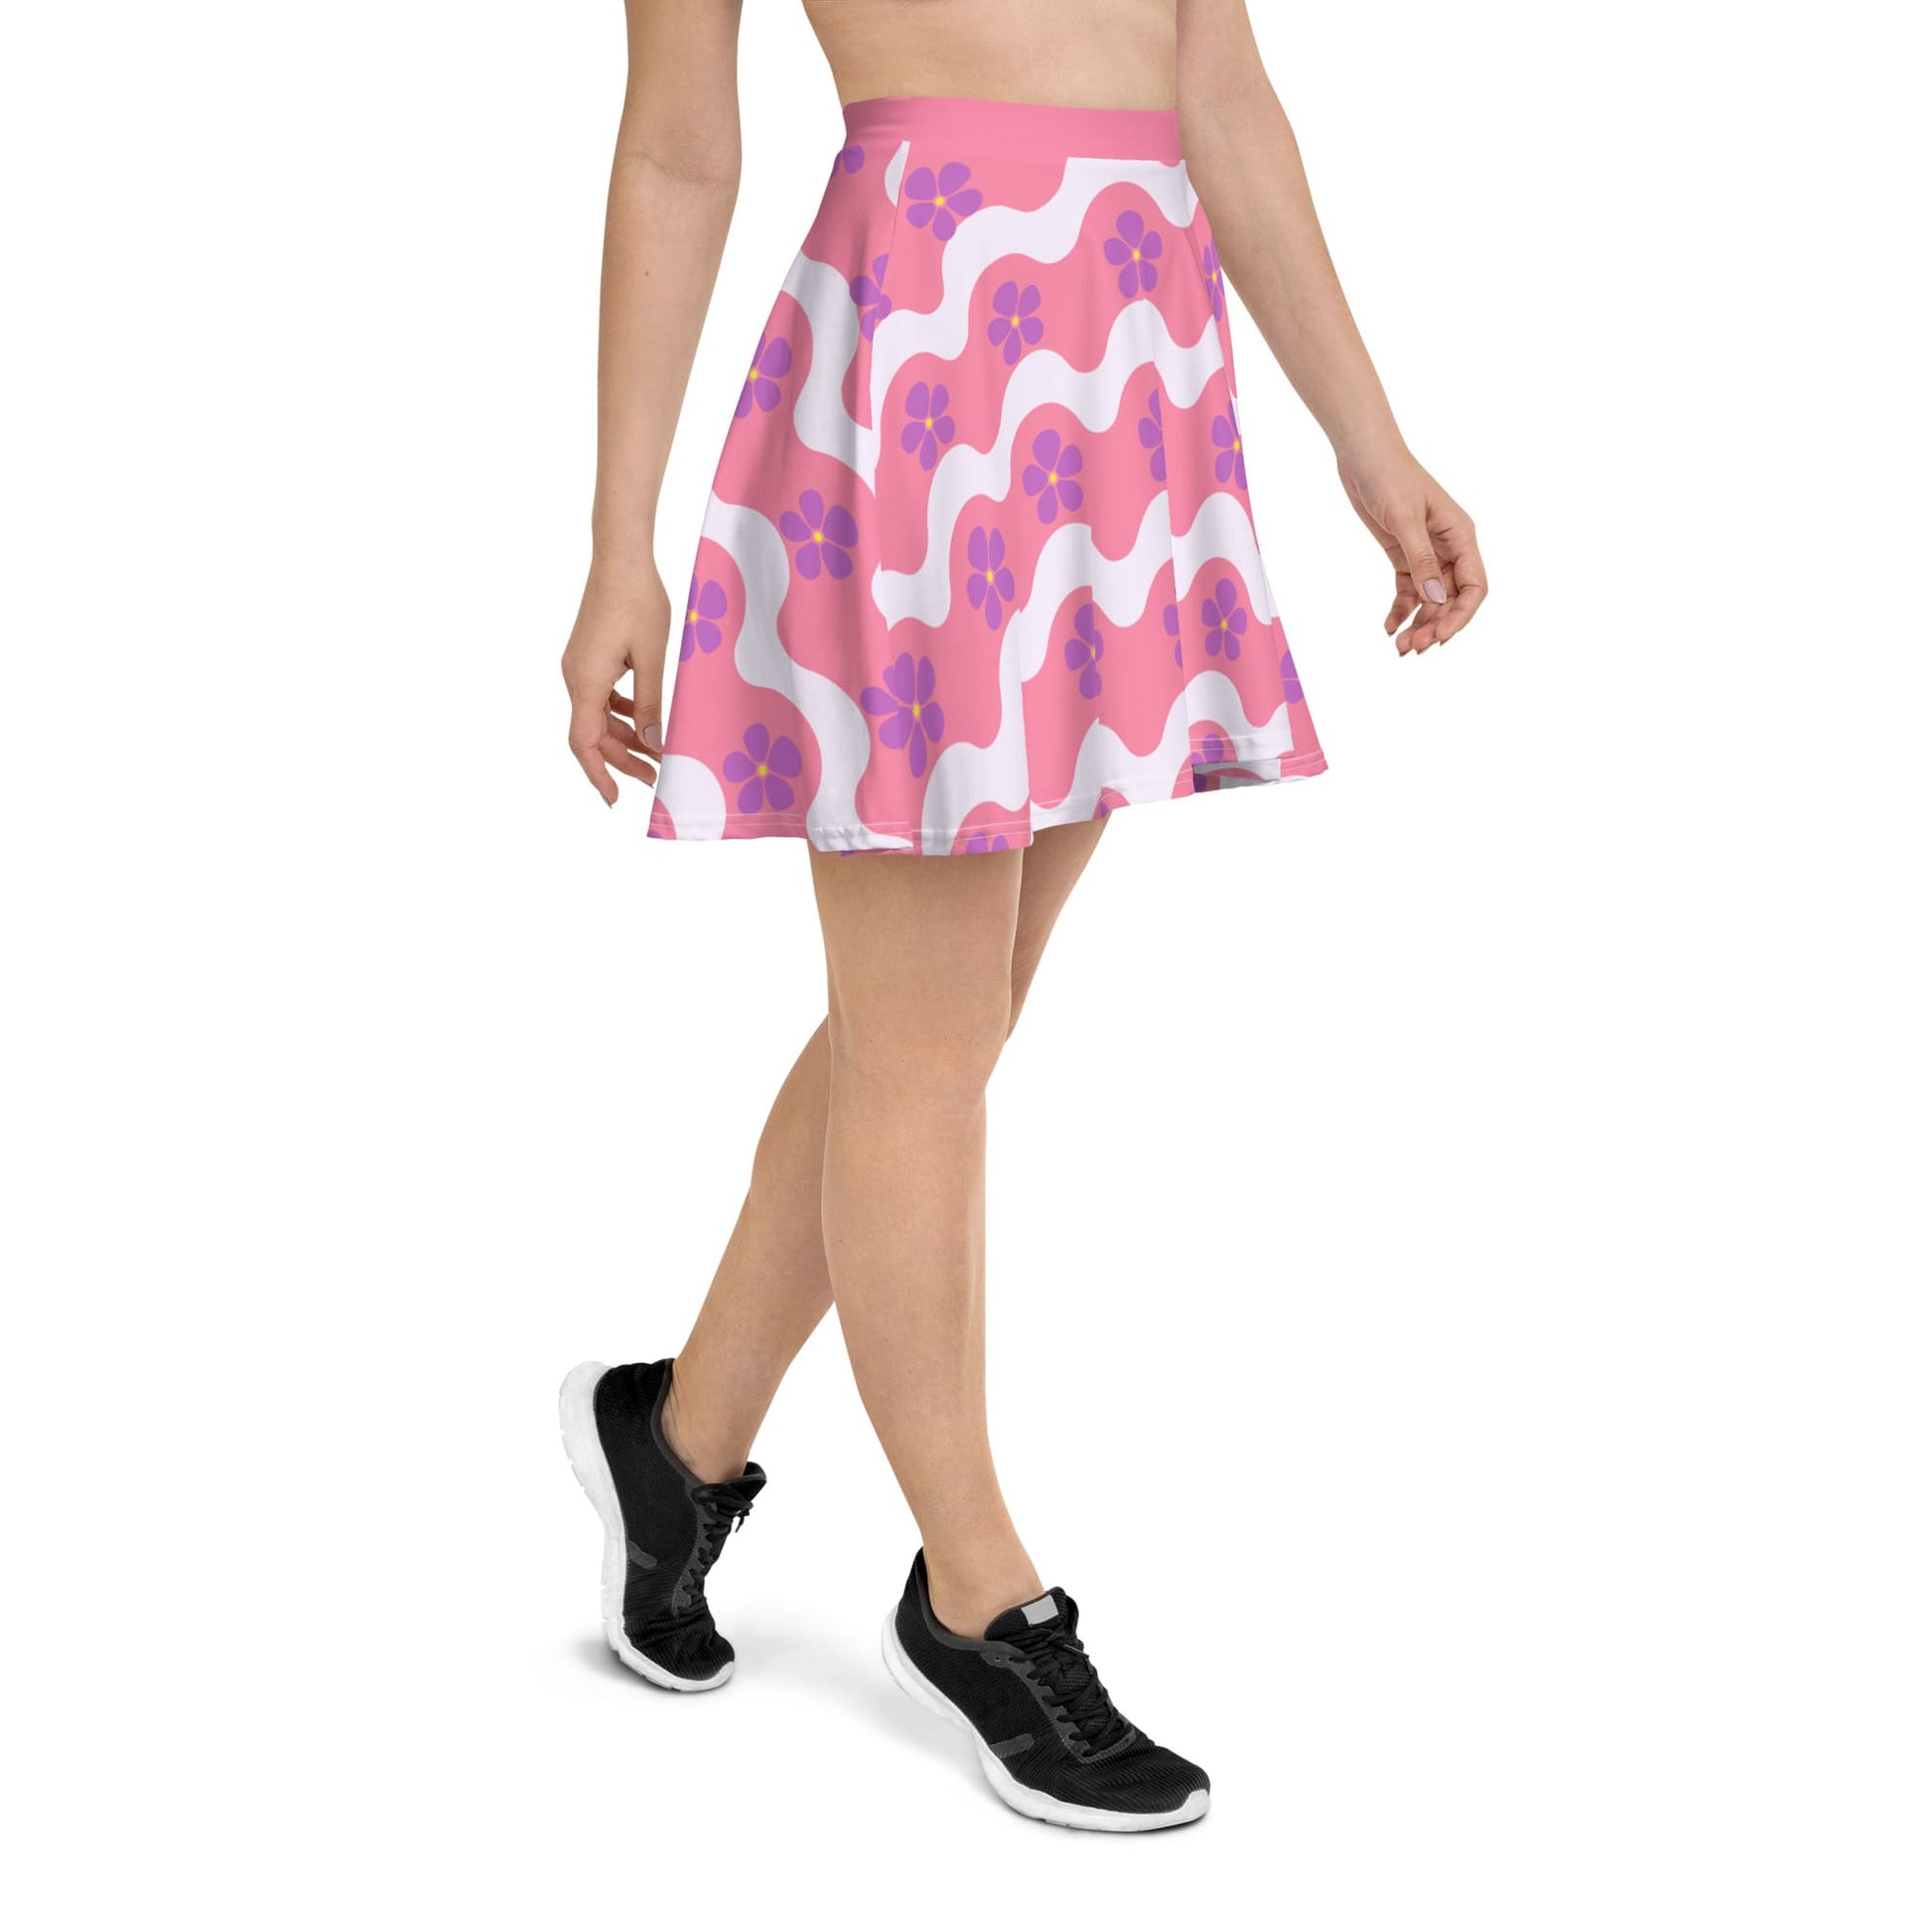 sapphic skirt, right